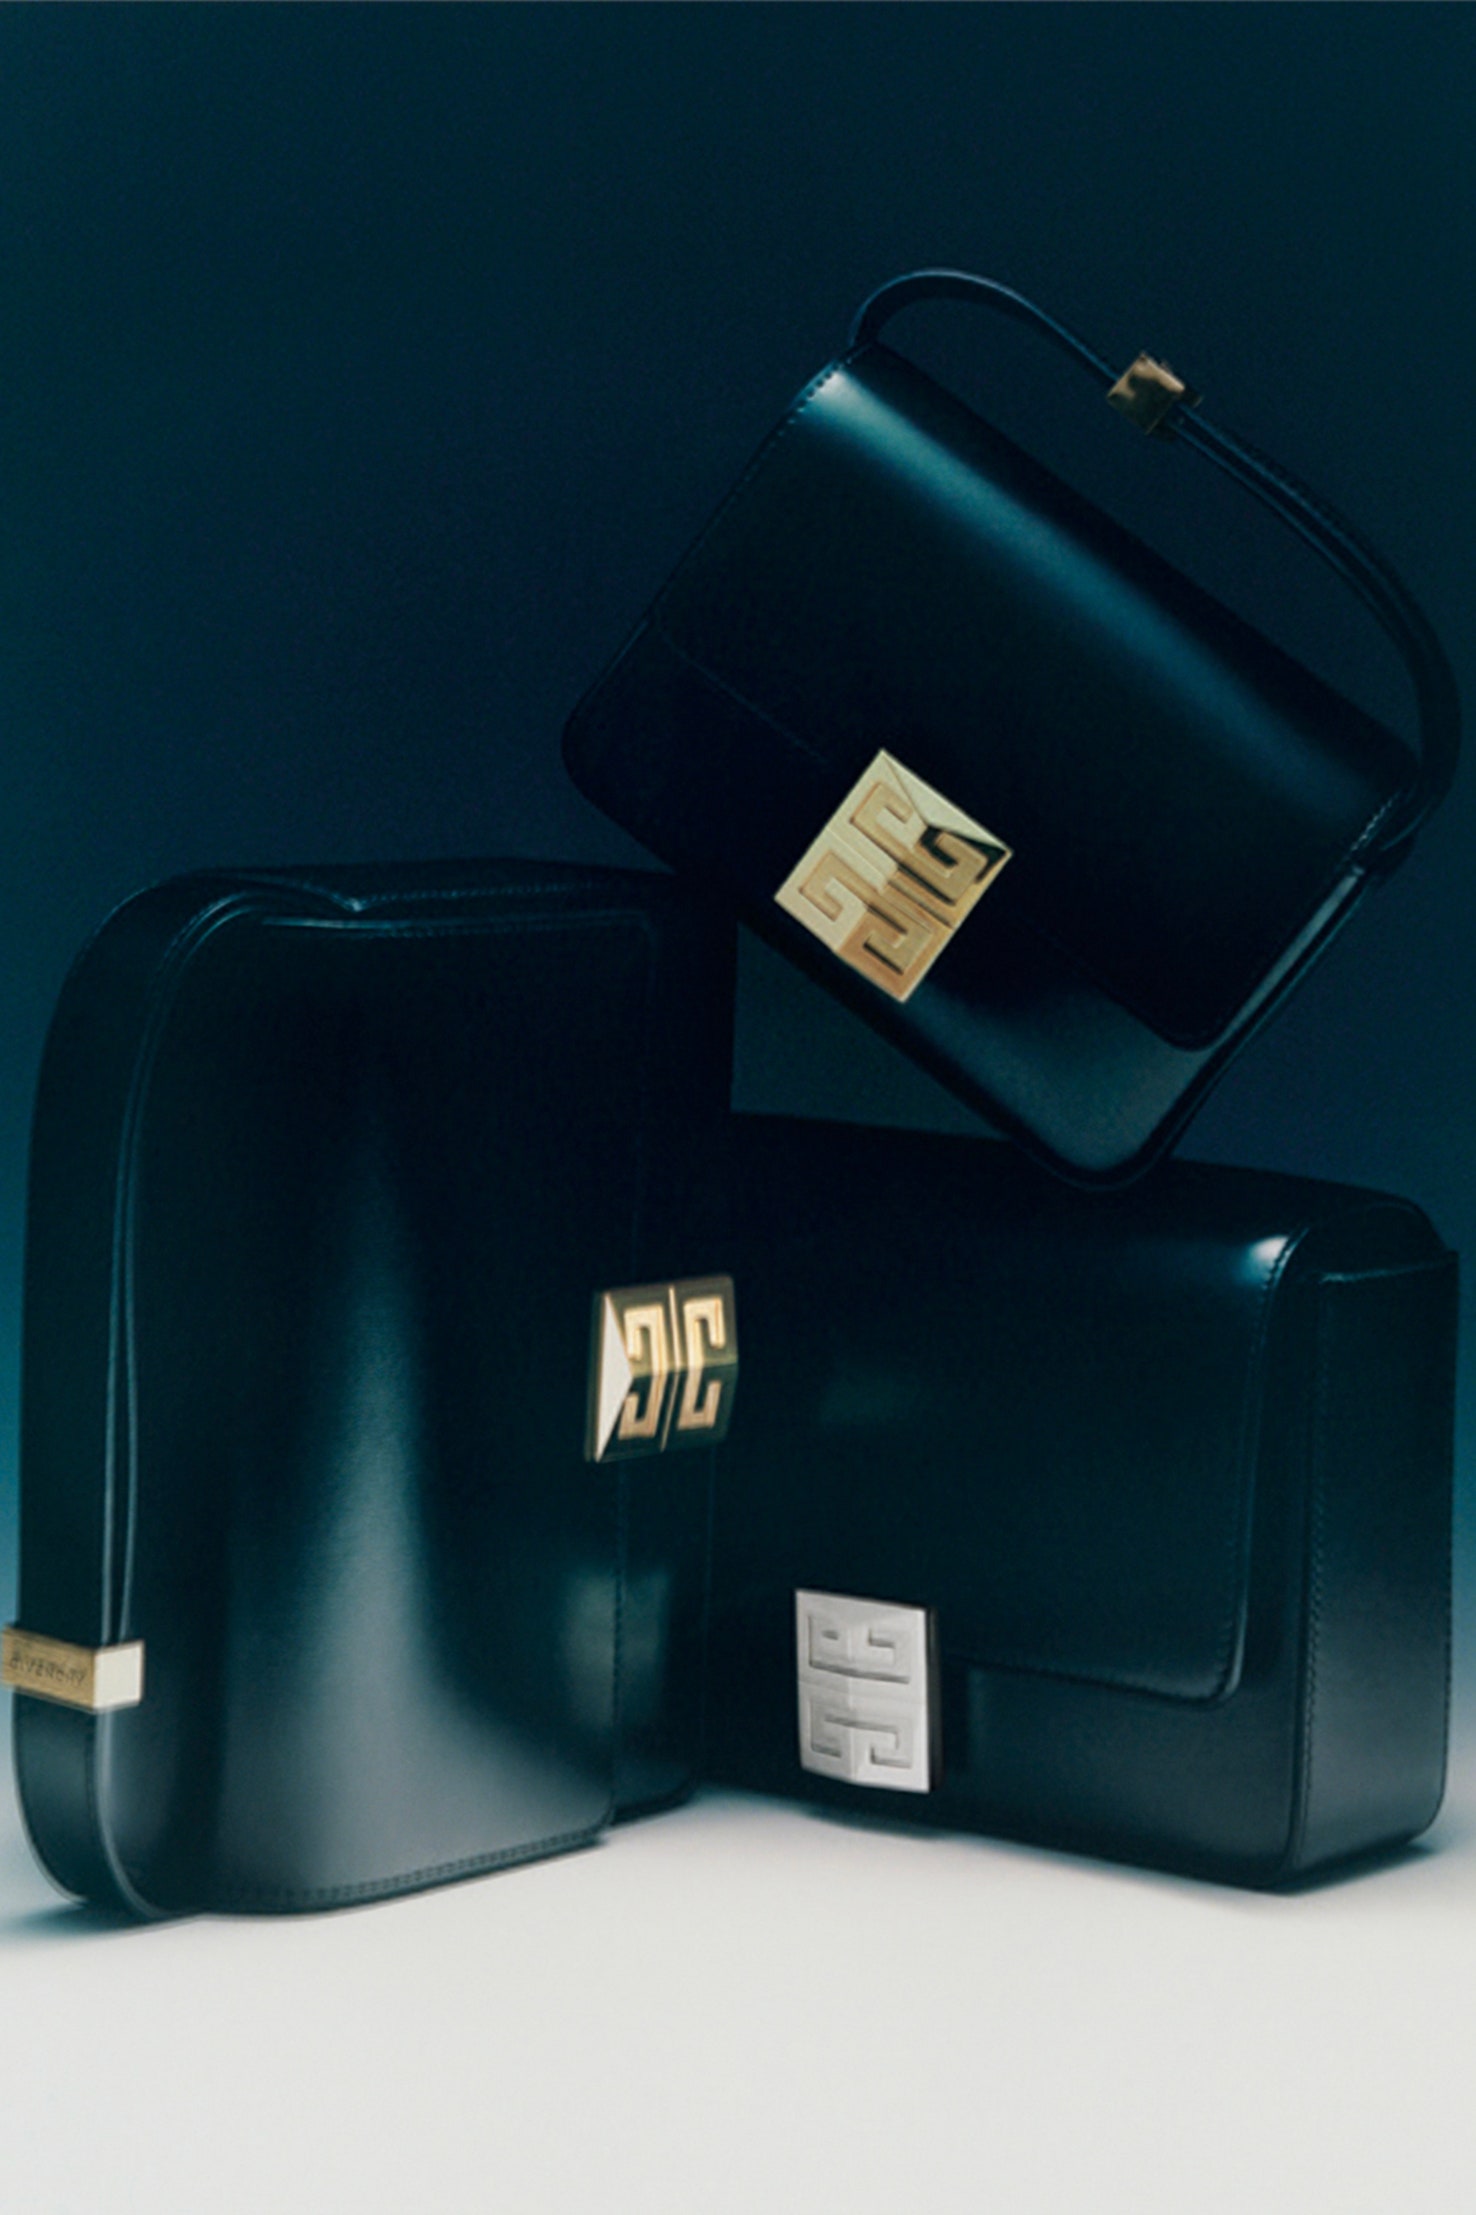 Givenchy 4G: Мэтью Уильямс представил новую сумку для бренда. Что надо